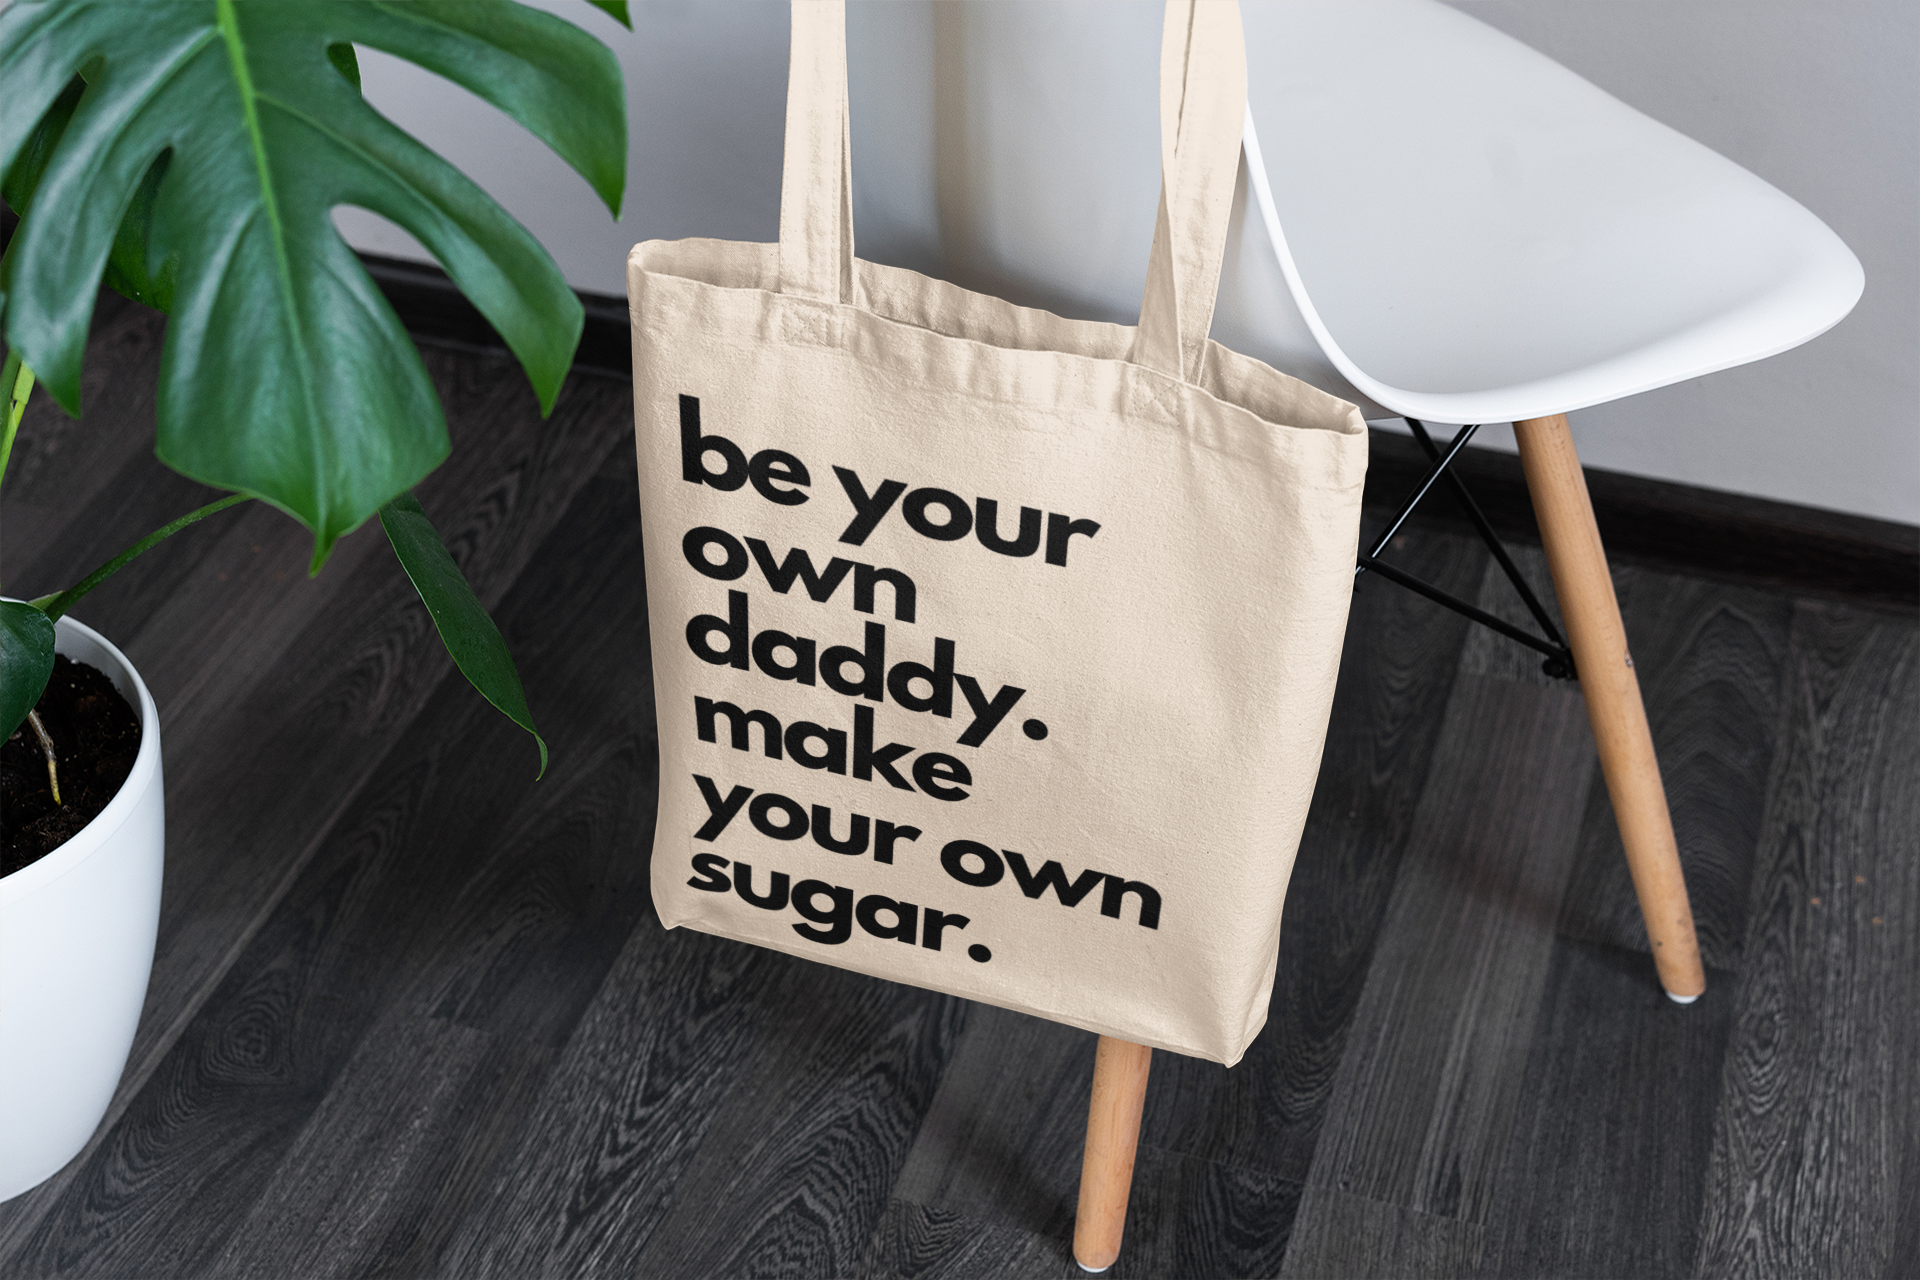 Bag Daddy